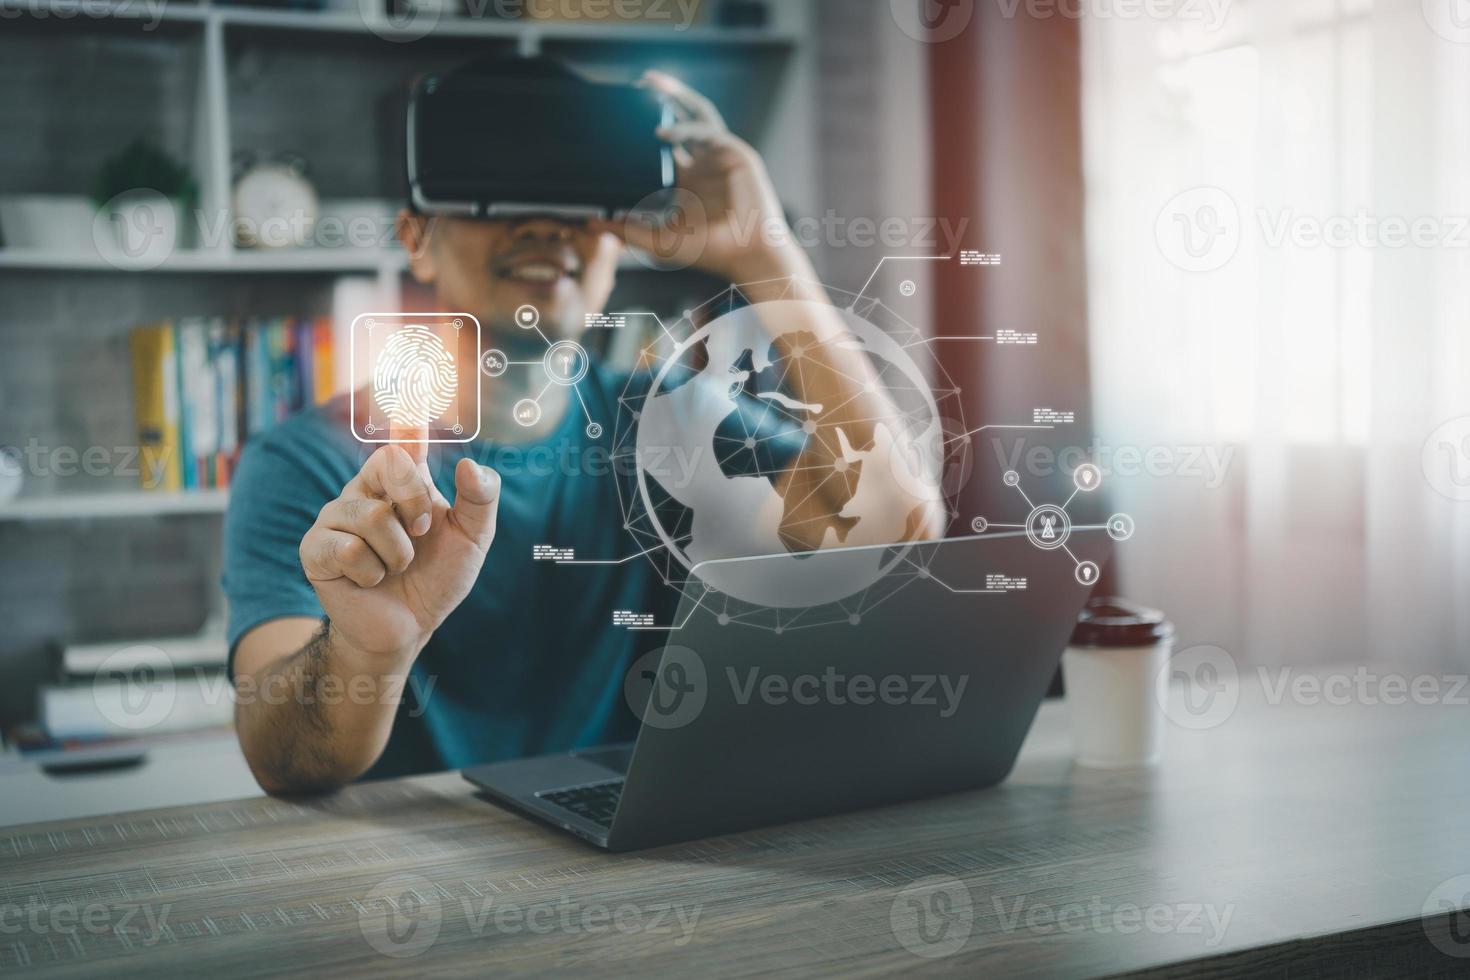 Asian man wearing VR glasses virtual global Internet connection metaverse and point finger to use degital fingerprint, Metaverse technology management, online documentation database, future technology photo